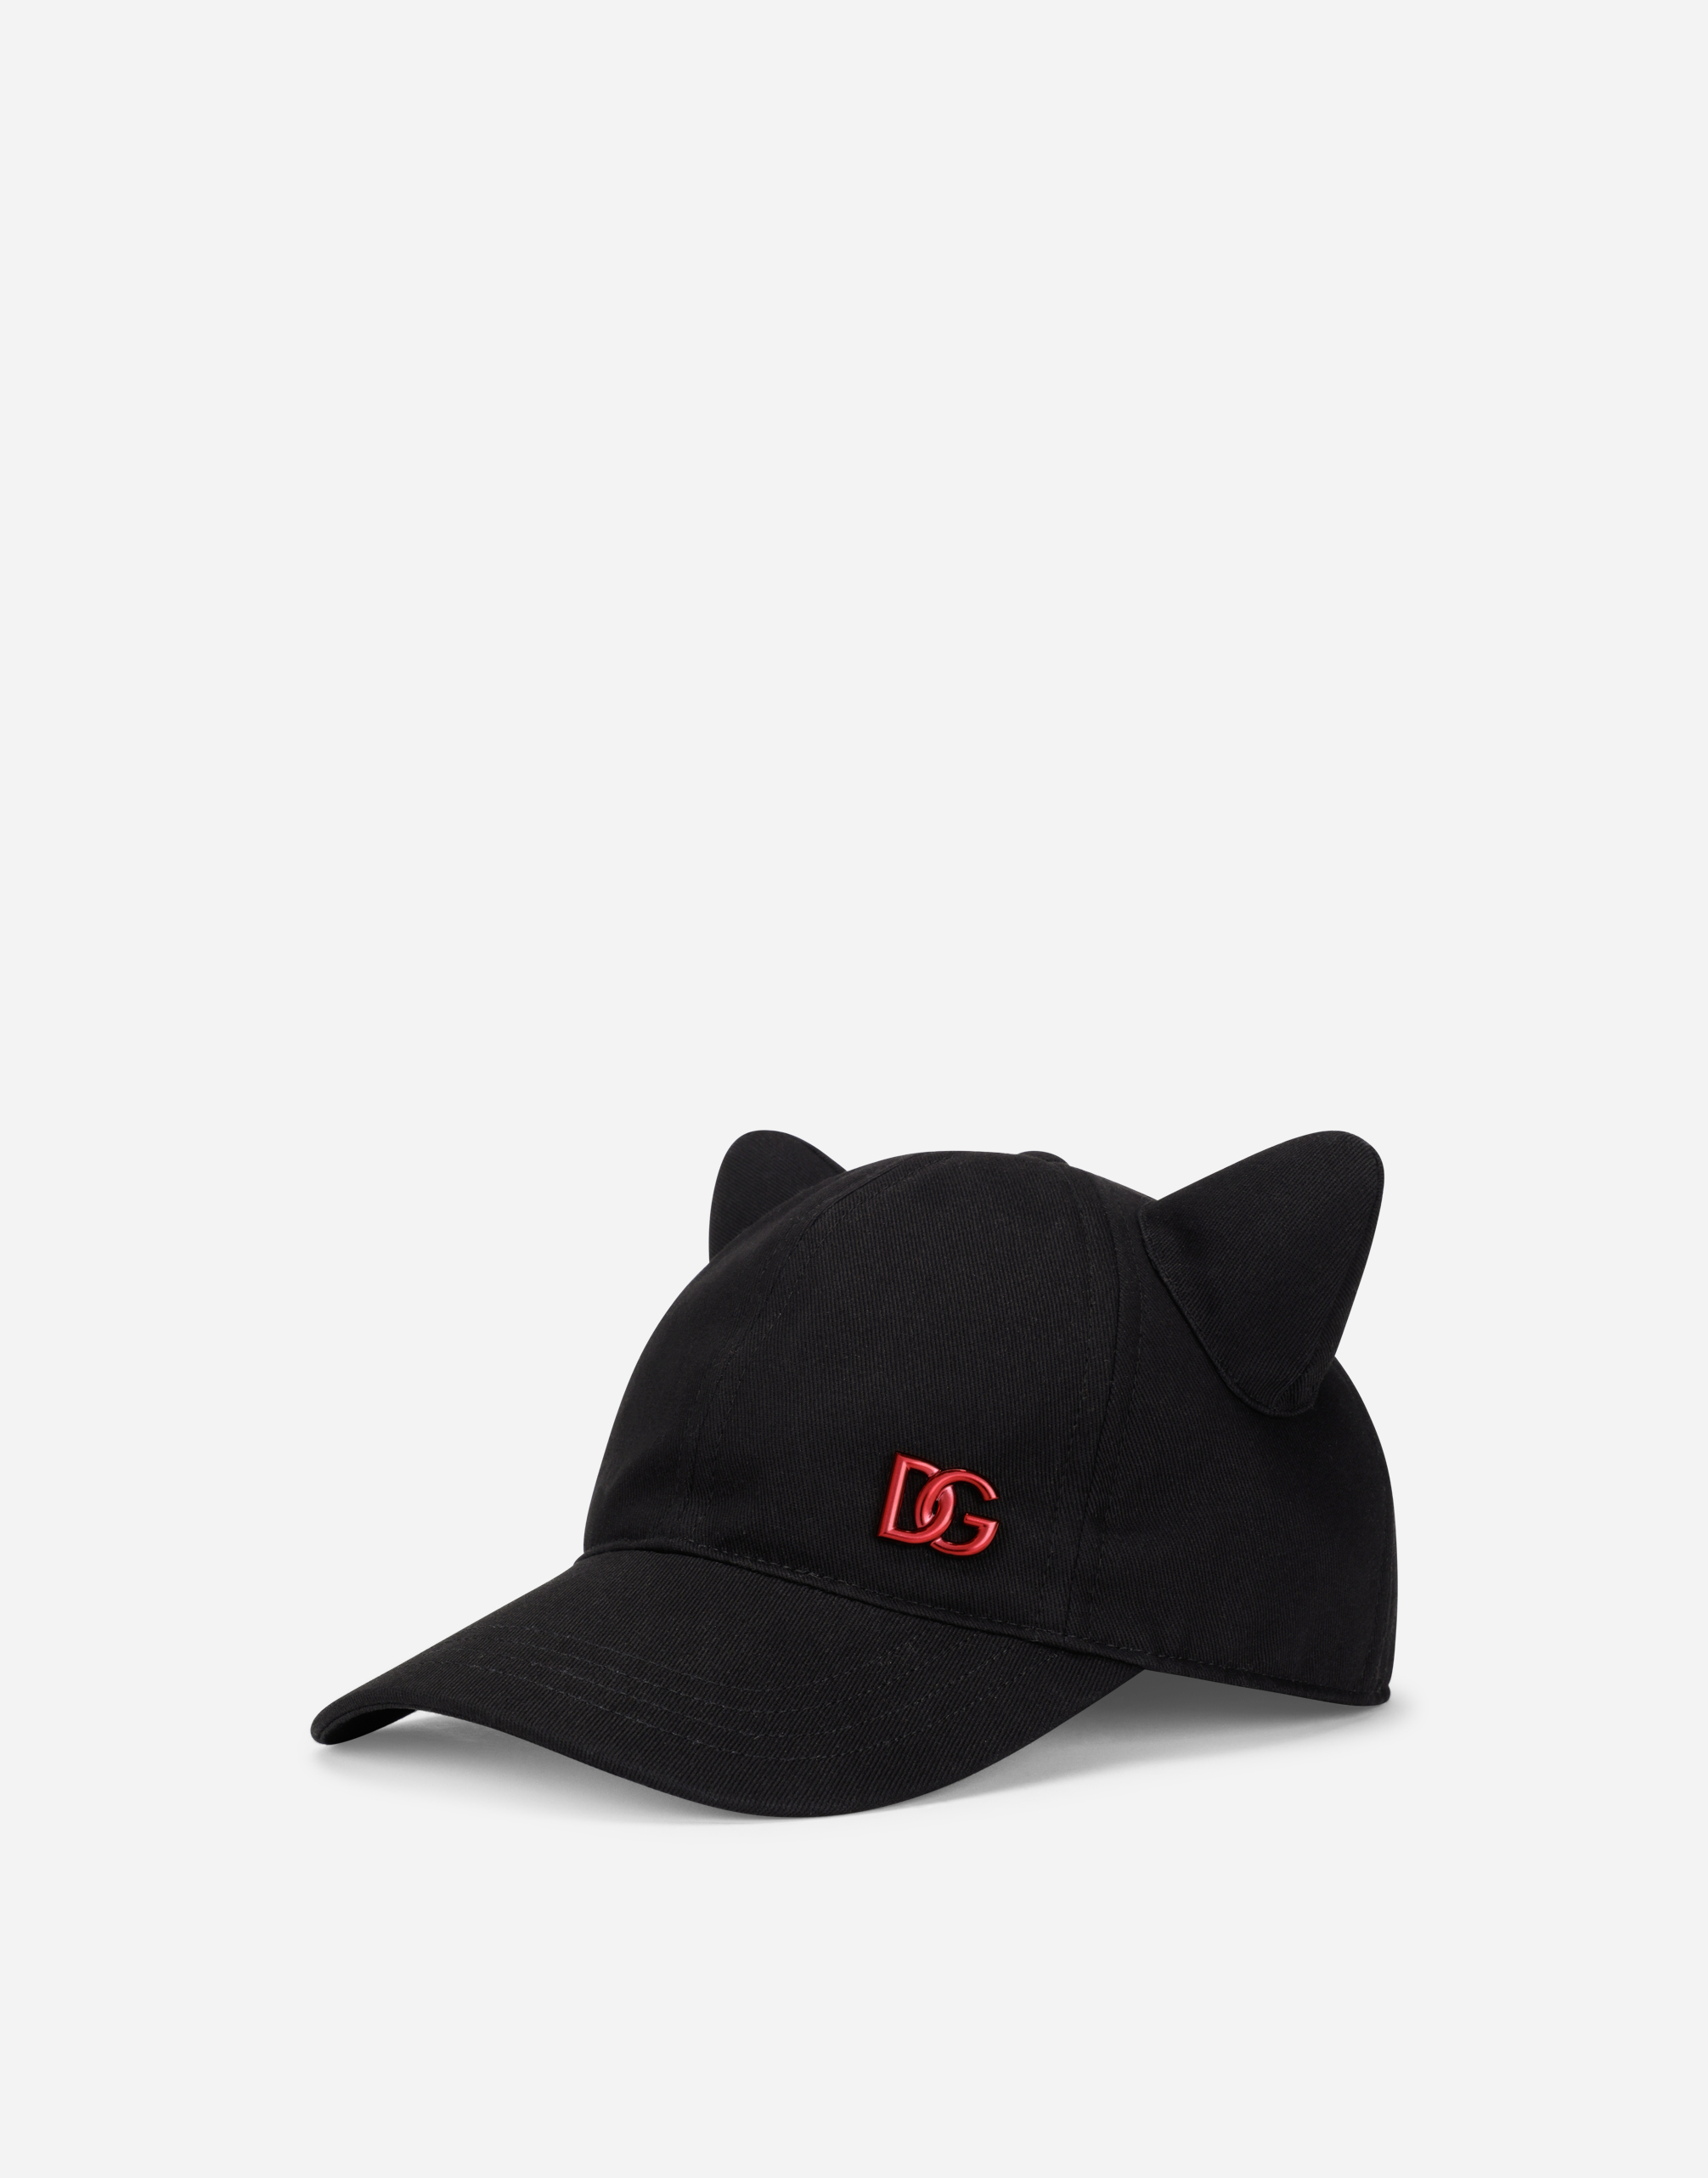 Baseball cap with metal DG logo in Black